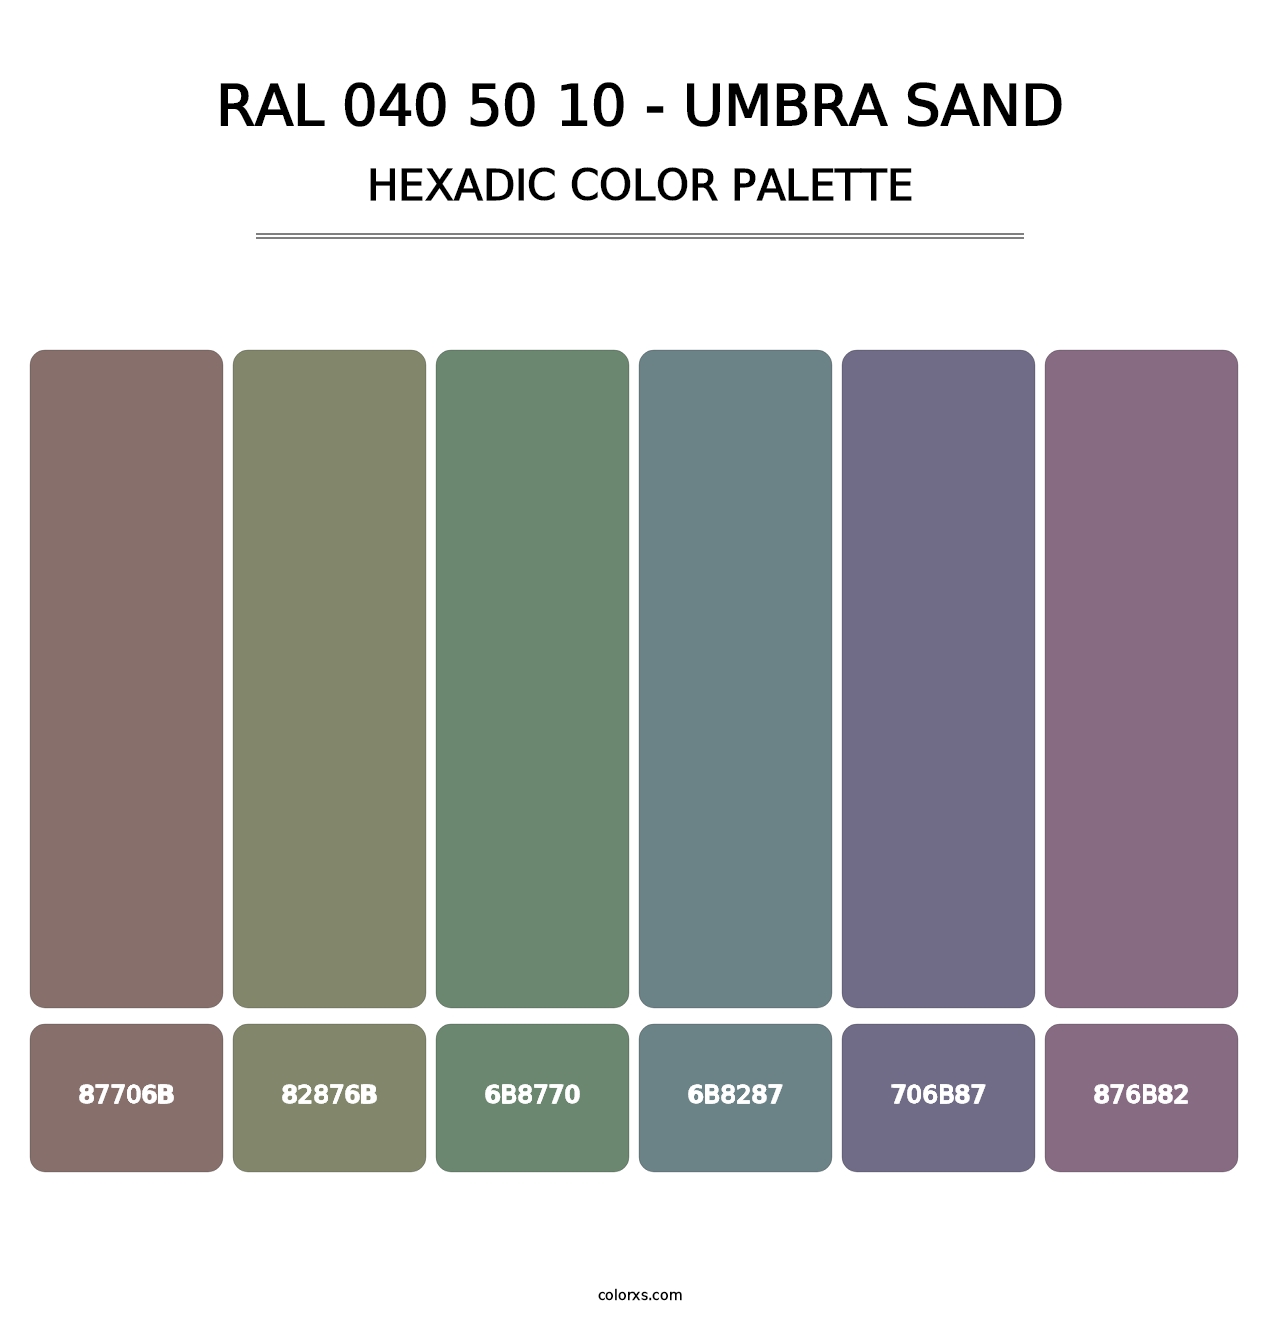 RAL 040 50 10 - Umbra Sand - Hexadic Color Palette